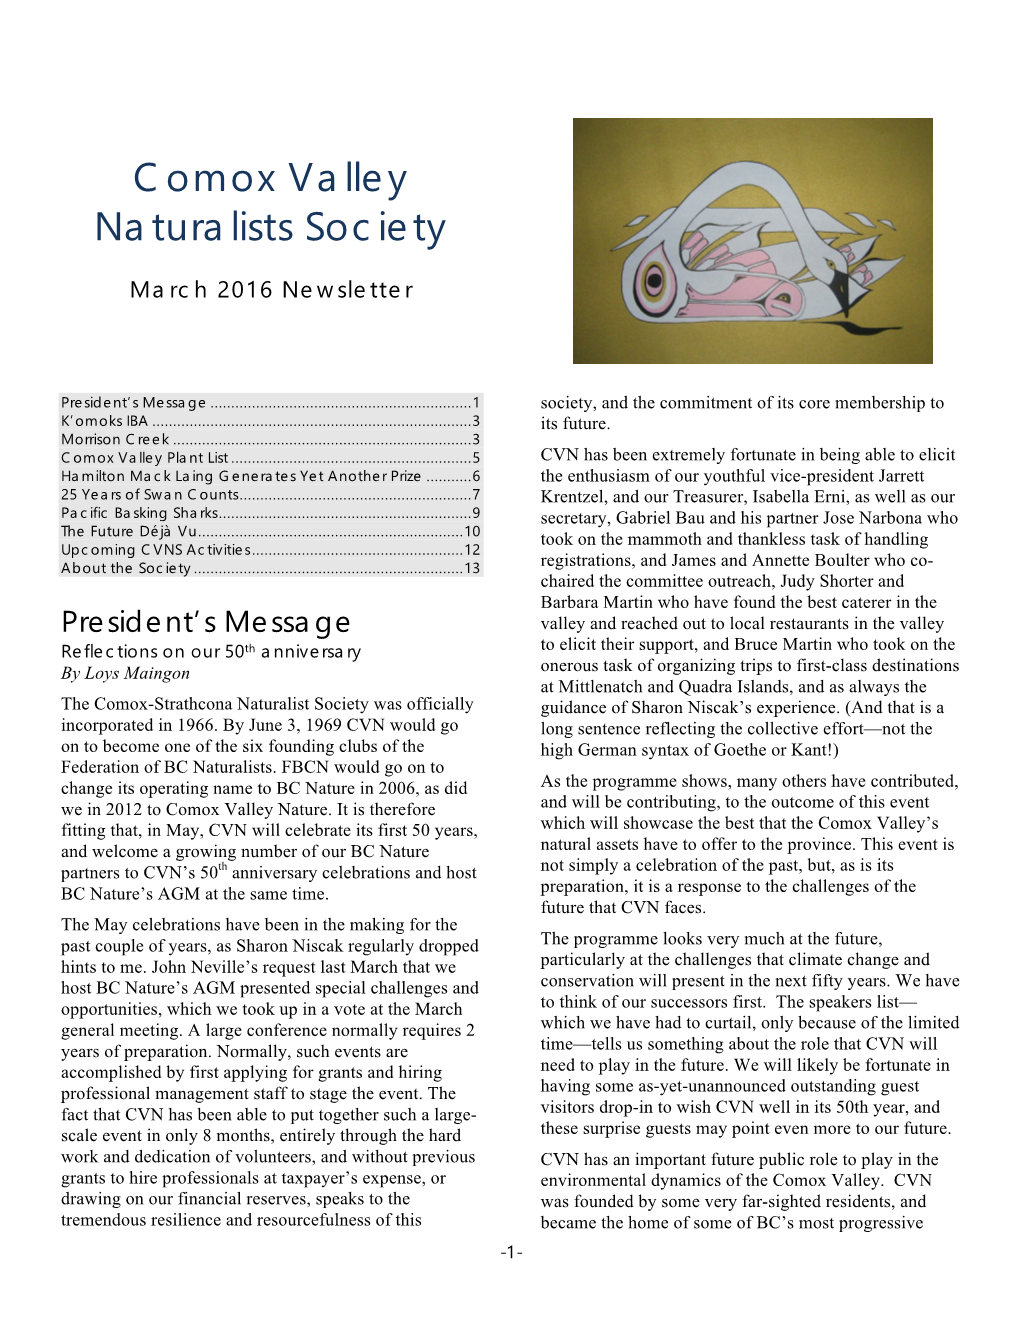 Comox Valley Naturalists Society